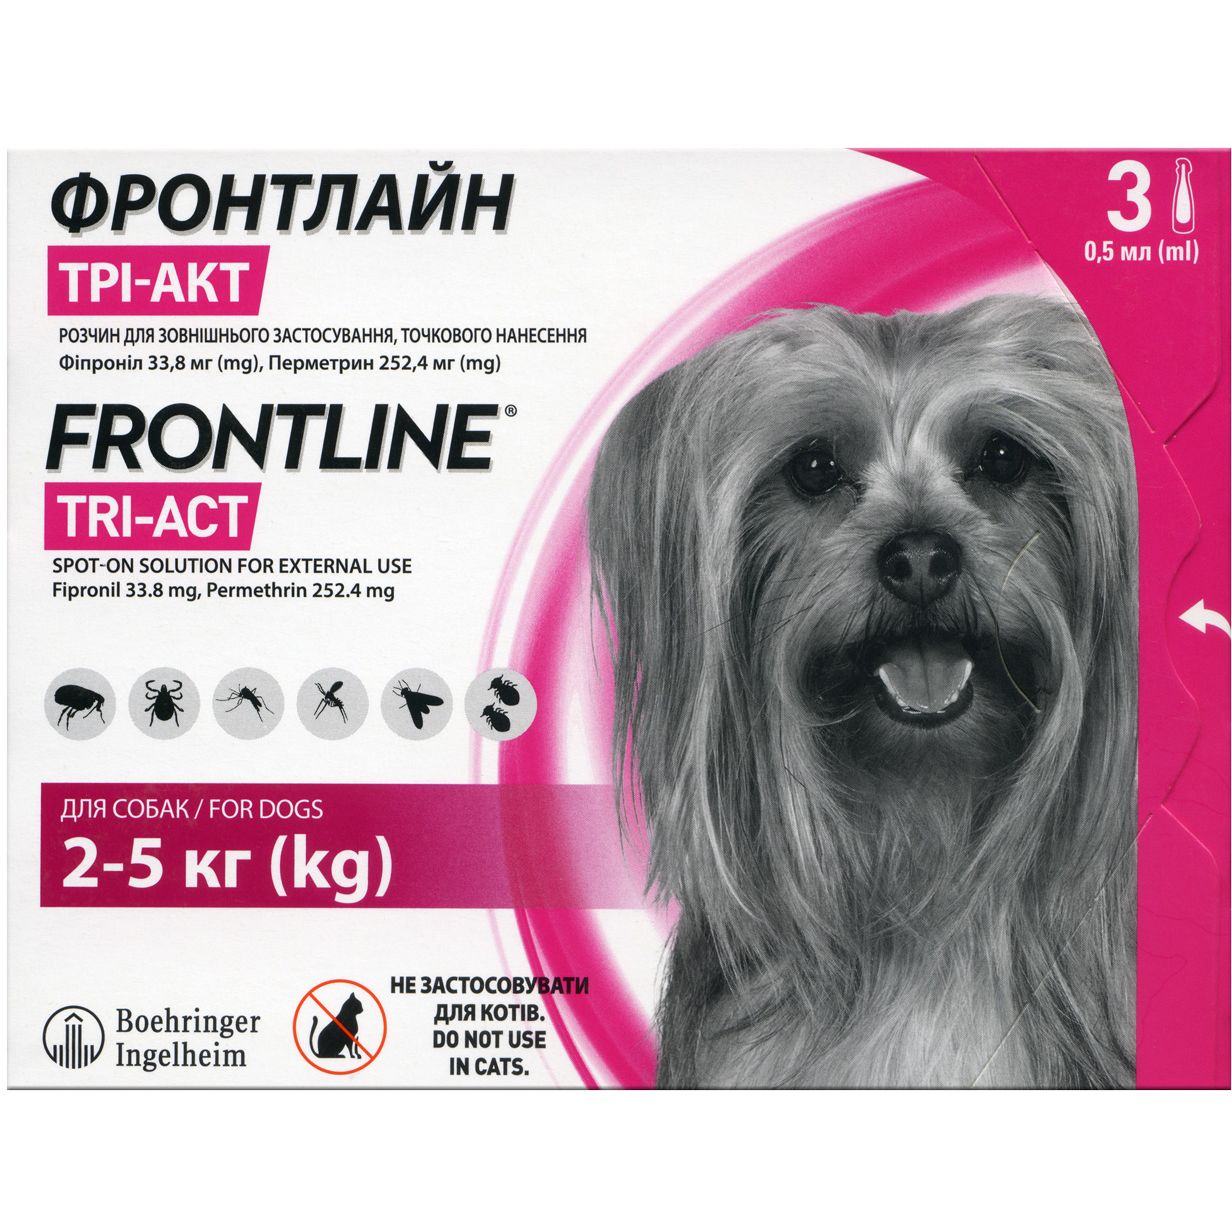 Капли Boehringer Ingelheim Frontline Tri-Act от блох и клещей для собак 2-5 кг 1.5 мл (3 шт. х 0.5 мл) (159911) - фото 1